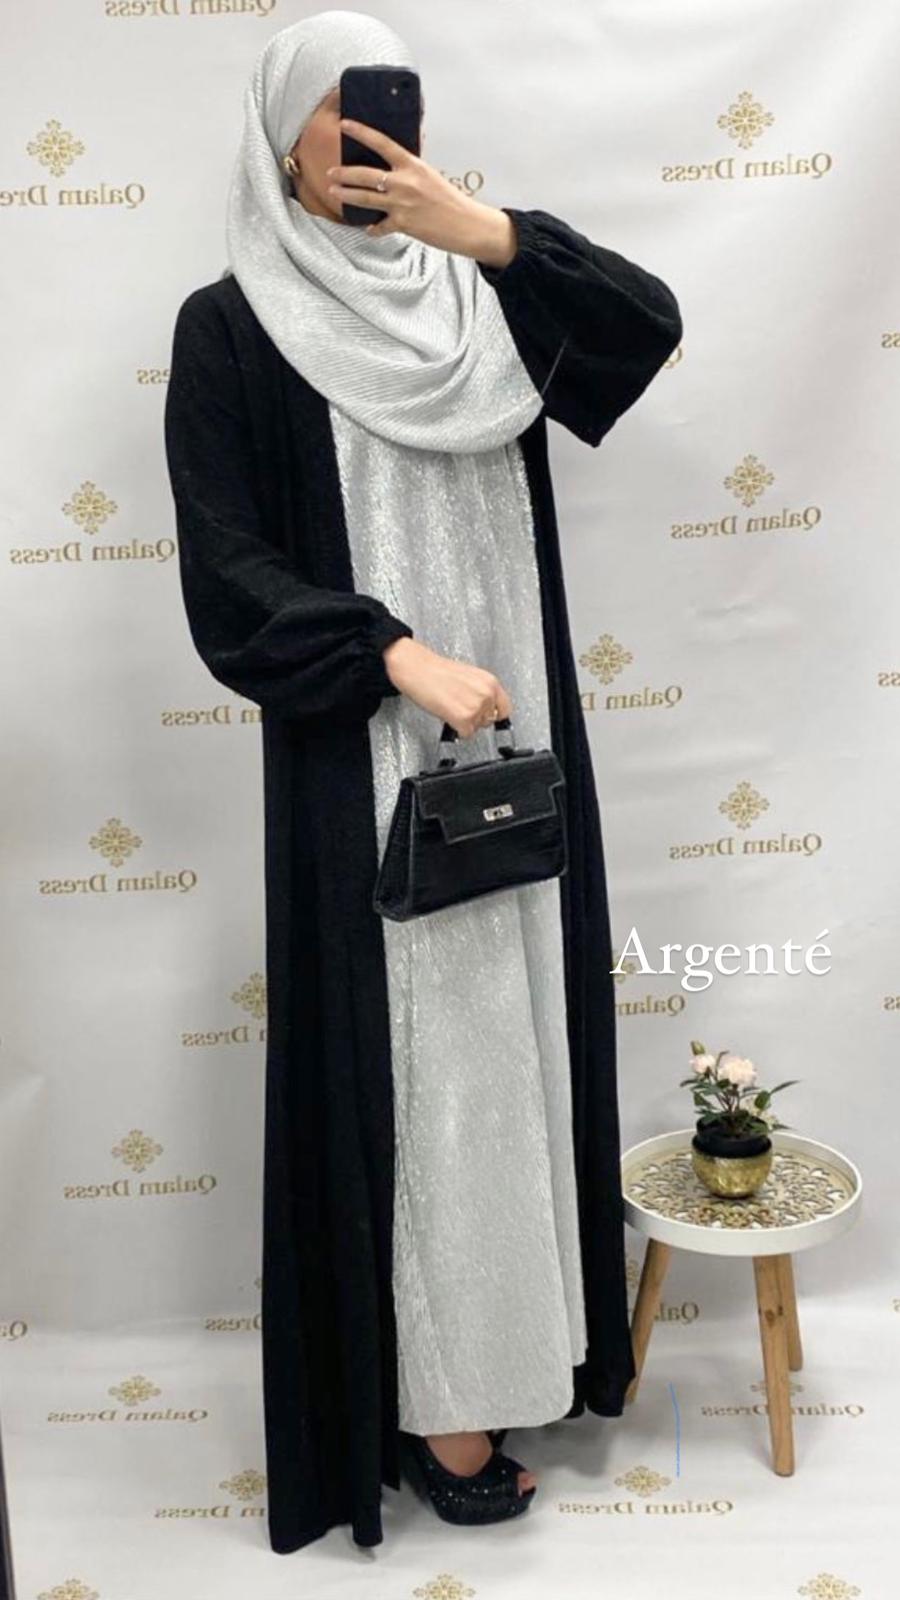 Robe du Soir SANAA Bleu Marine - Robe Evasé - Qalam Dress – Qalam Dress -  Tendance Hijab